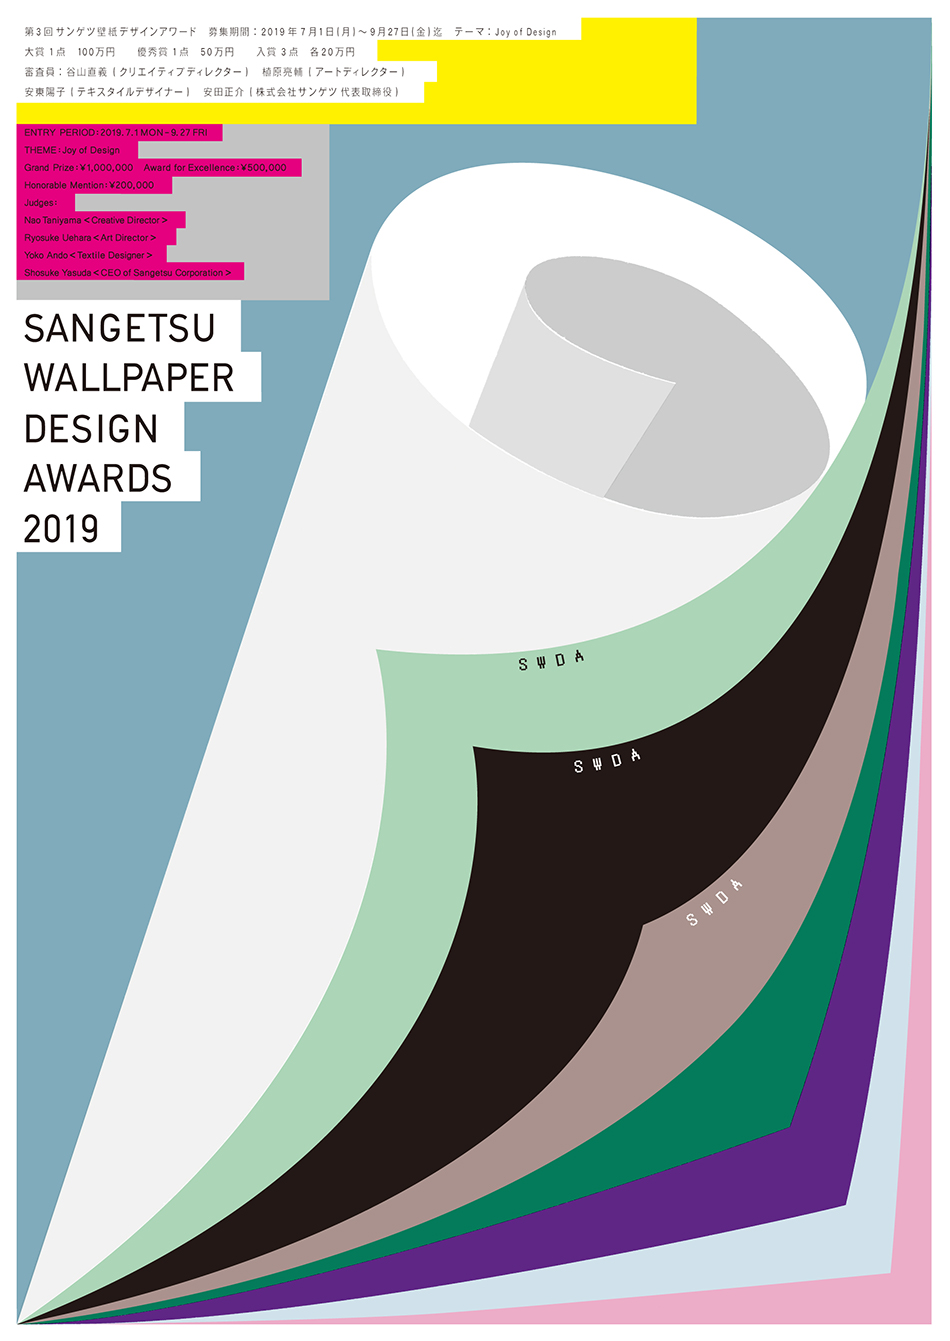 SANGETSU WALLPAPER DESIGN AWARDS 2019